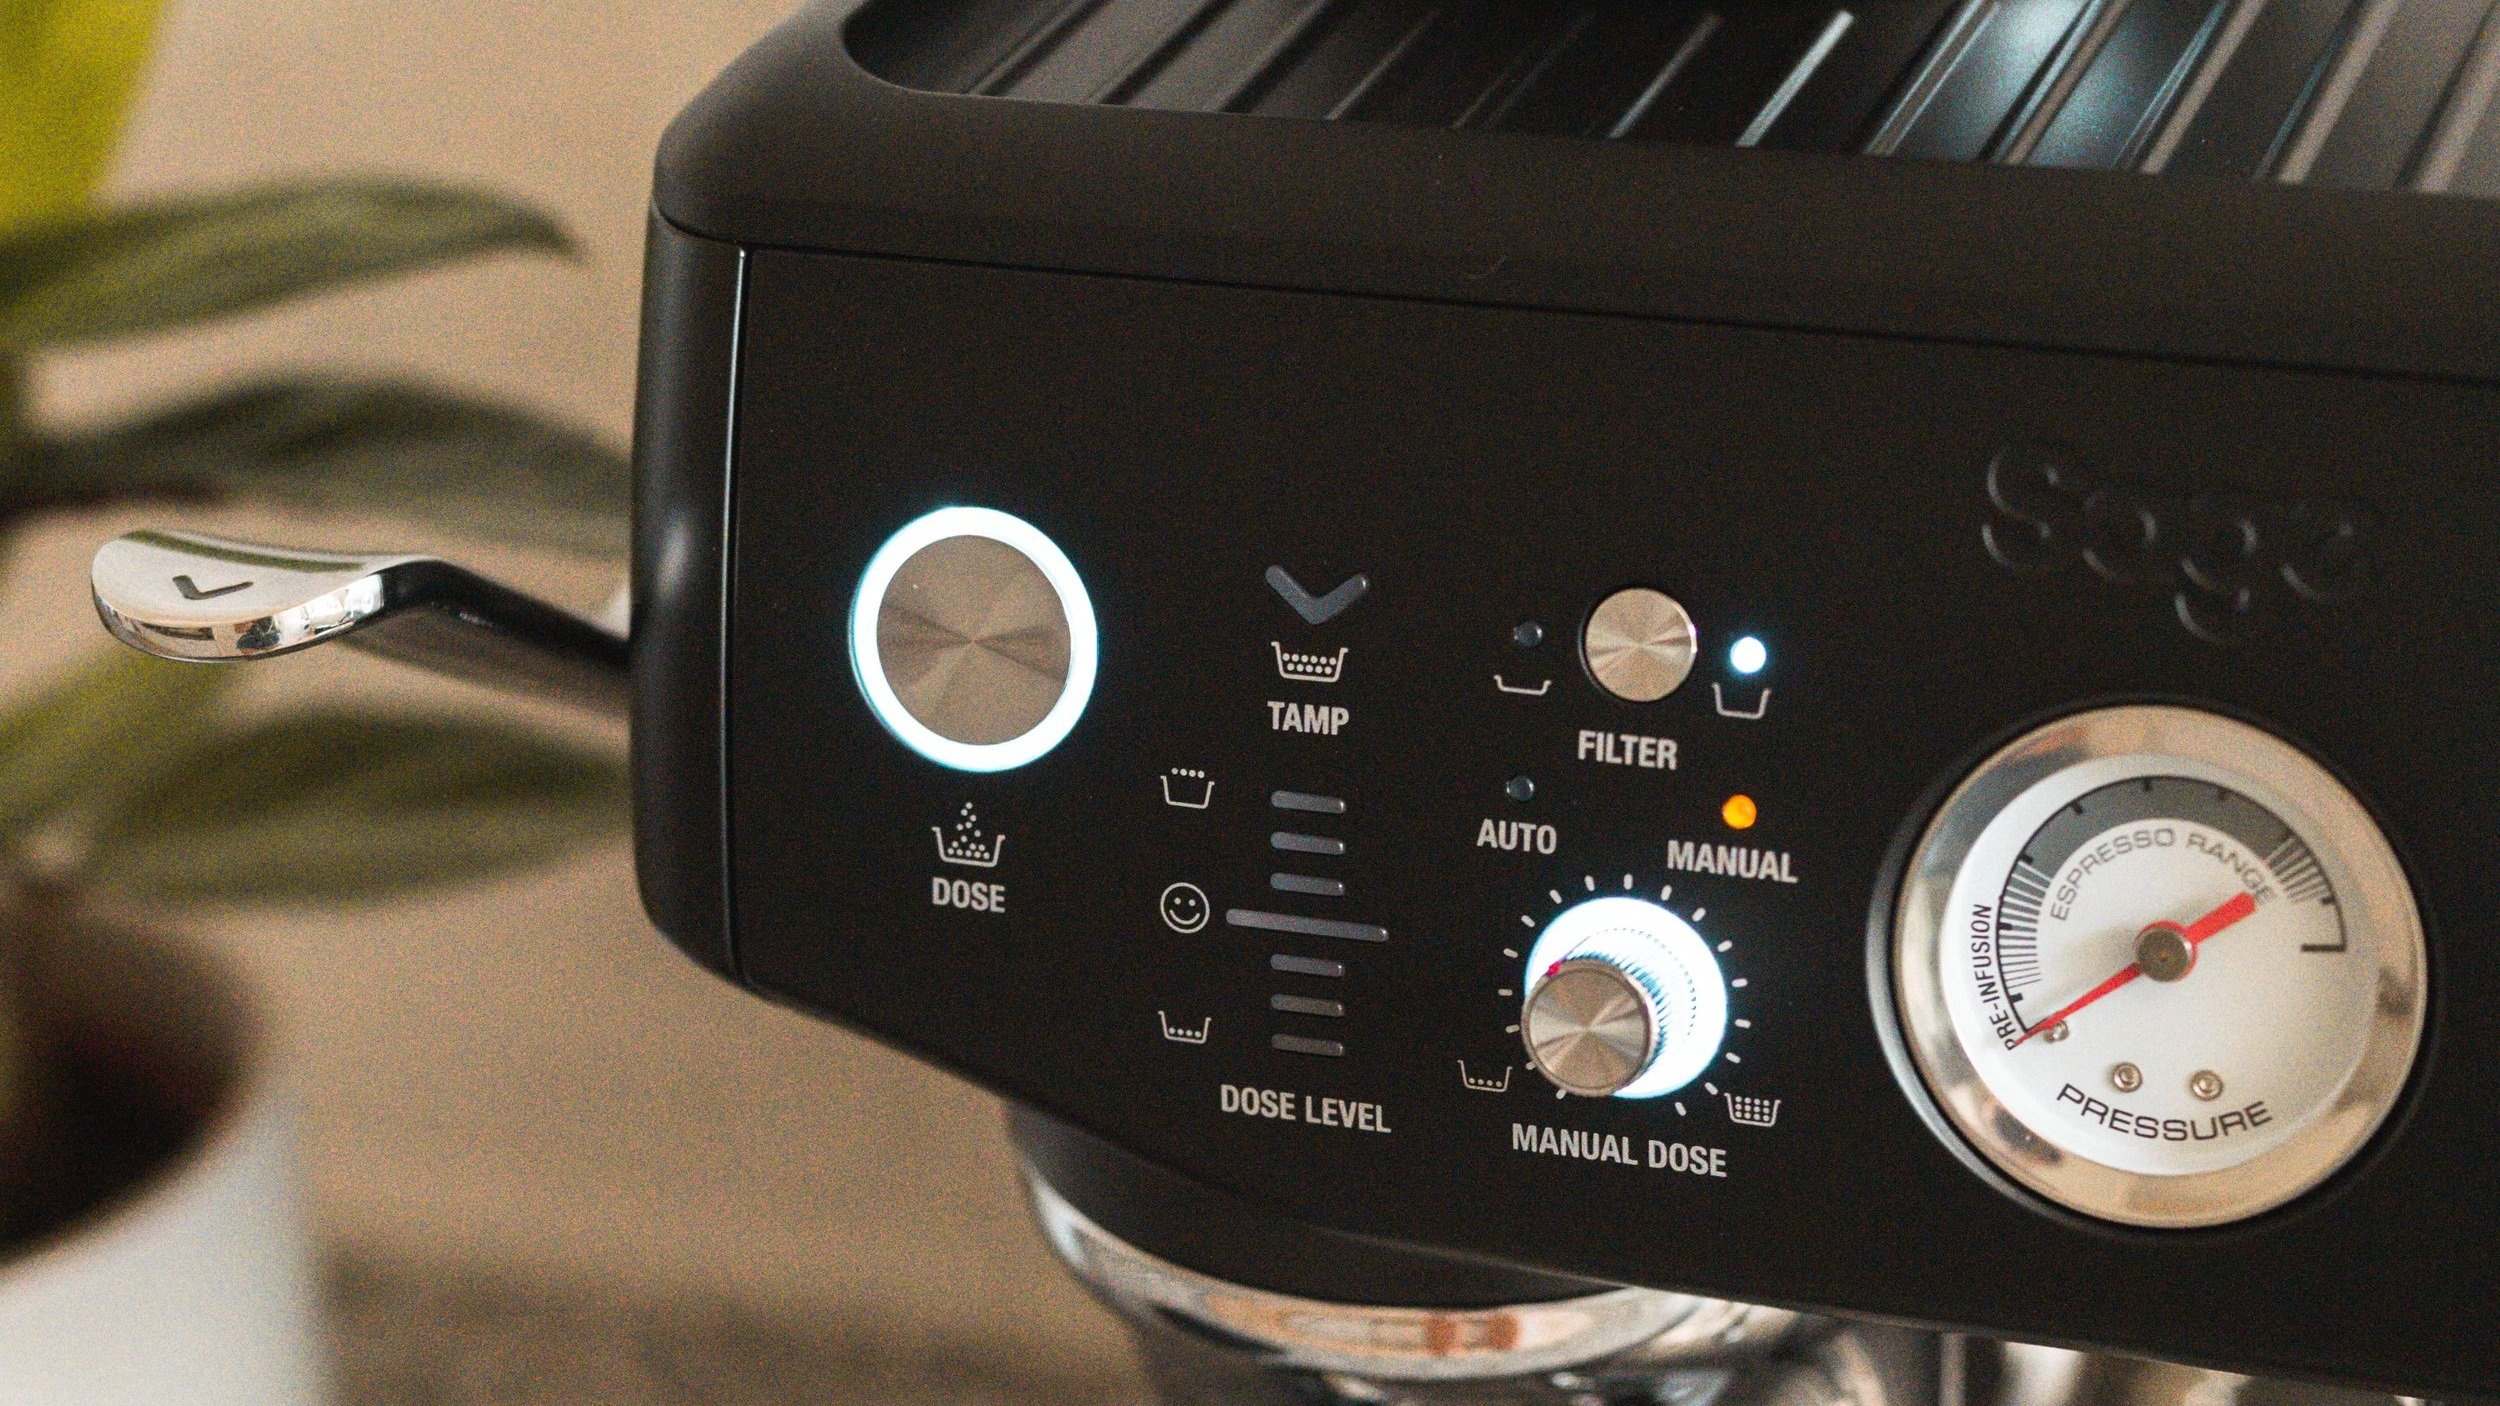 Breville Barista Express Impress: 's Best Selling Integrated Tamper Espresso  Machine 